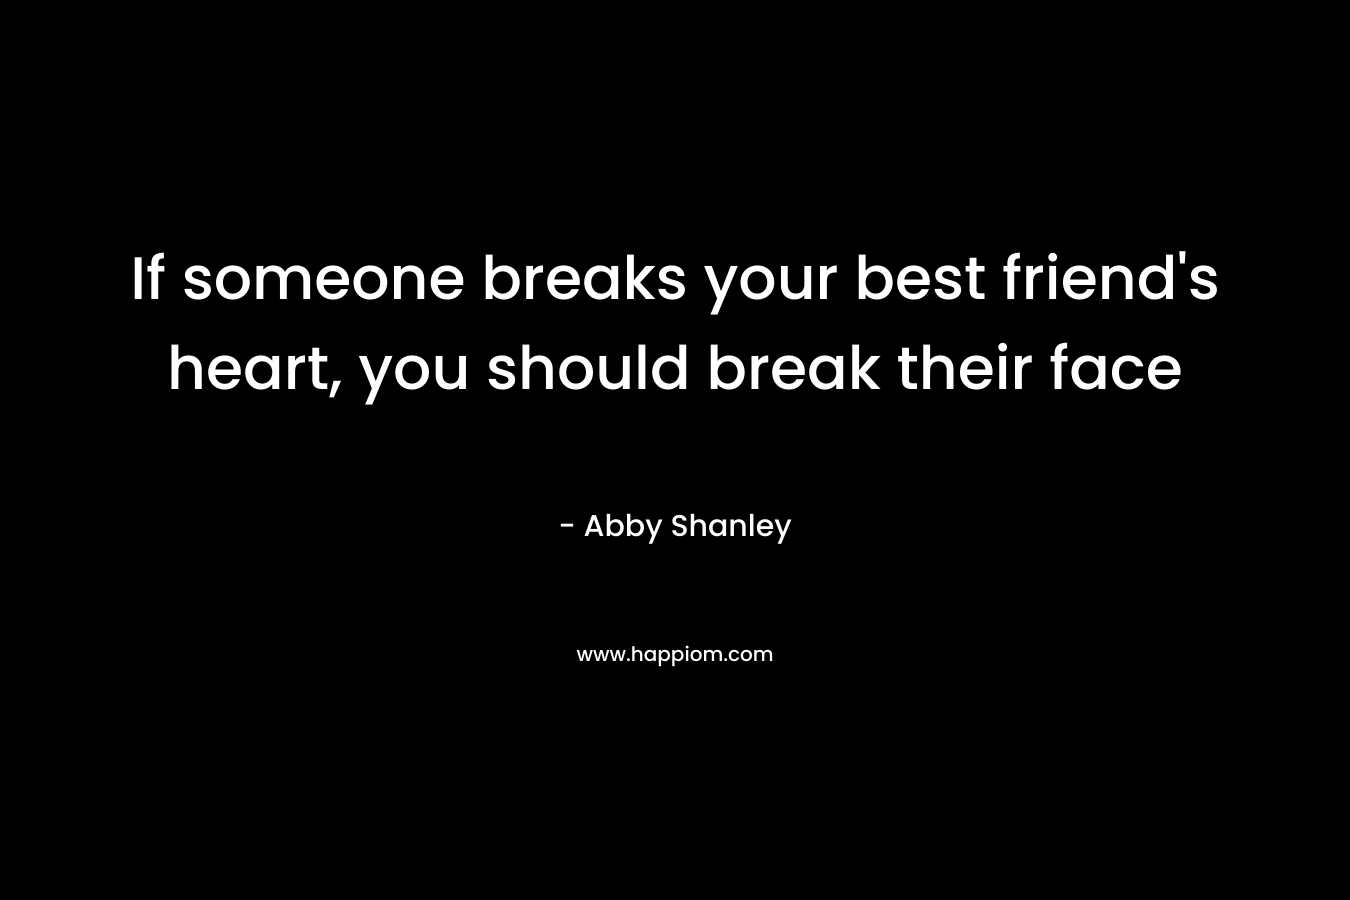 If someone breaks your best friend's heart, you should break their face